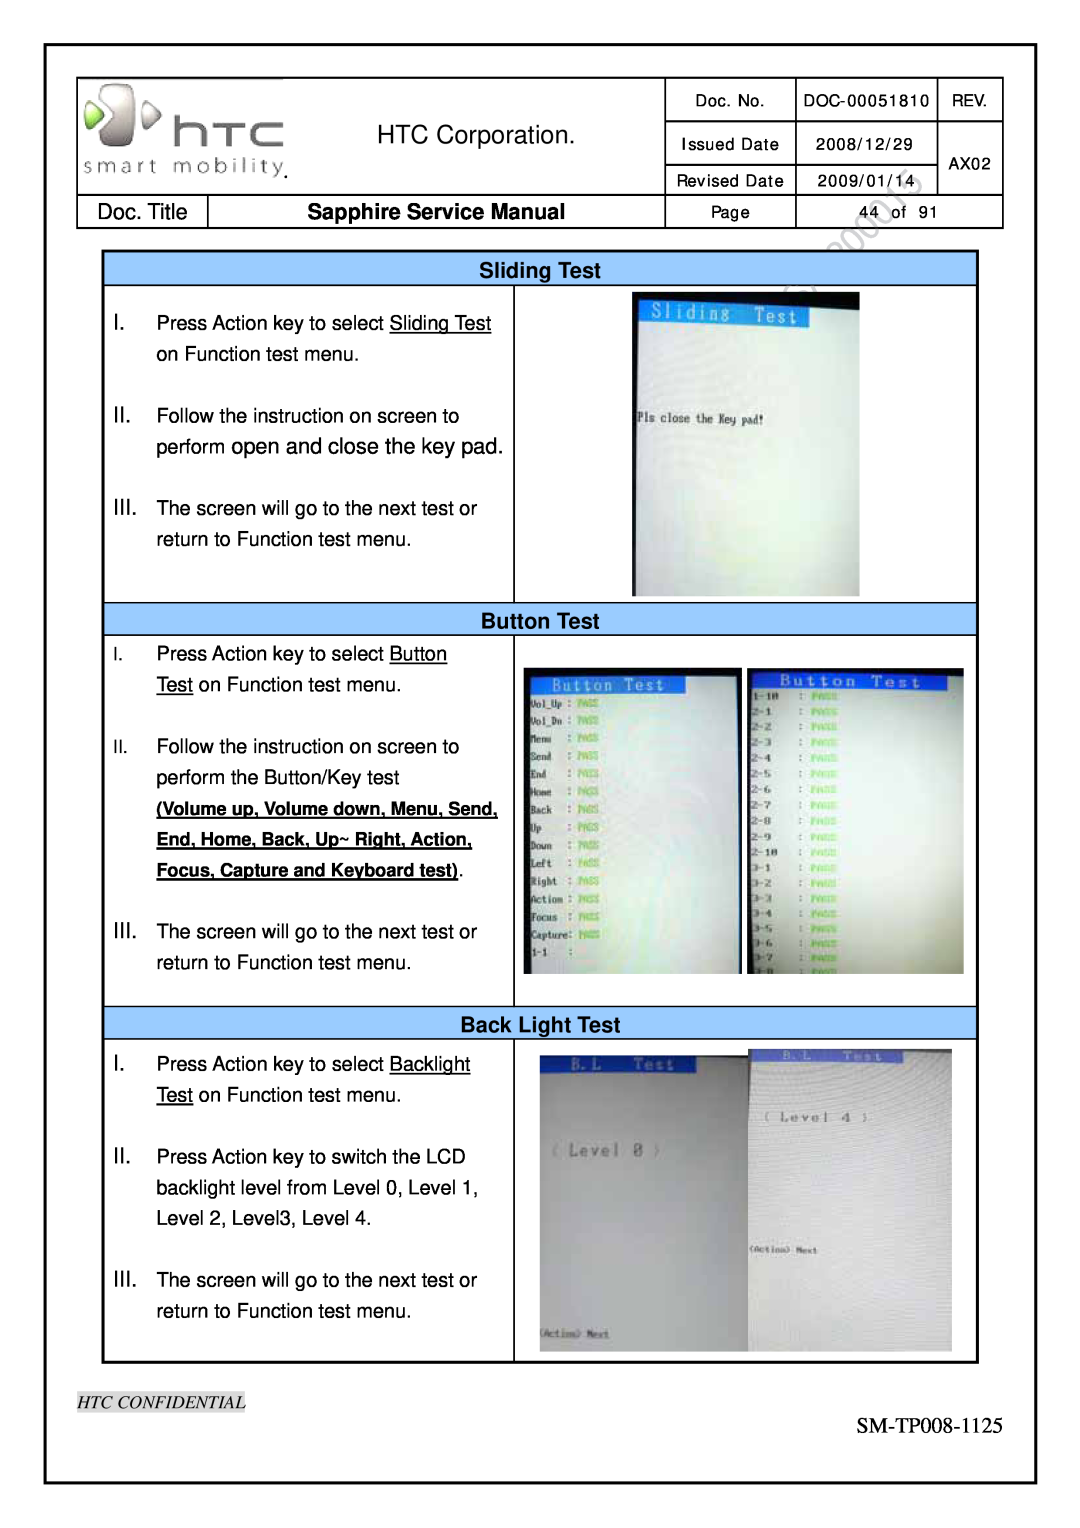 HTC SM-TP008-1125 service manual Sliding Test, Button Test, Back Light Test, HTC Corporation, Sapphire Service Manual 